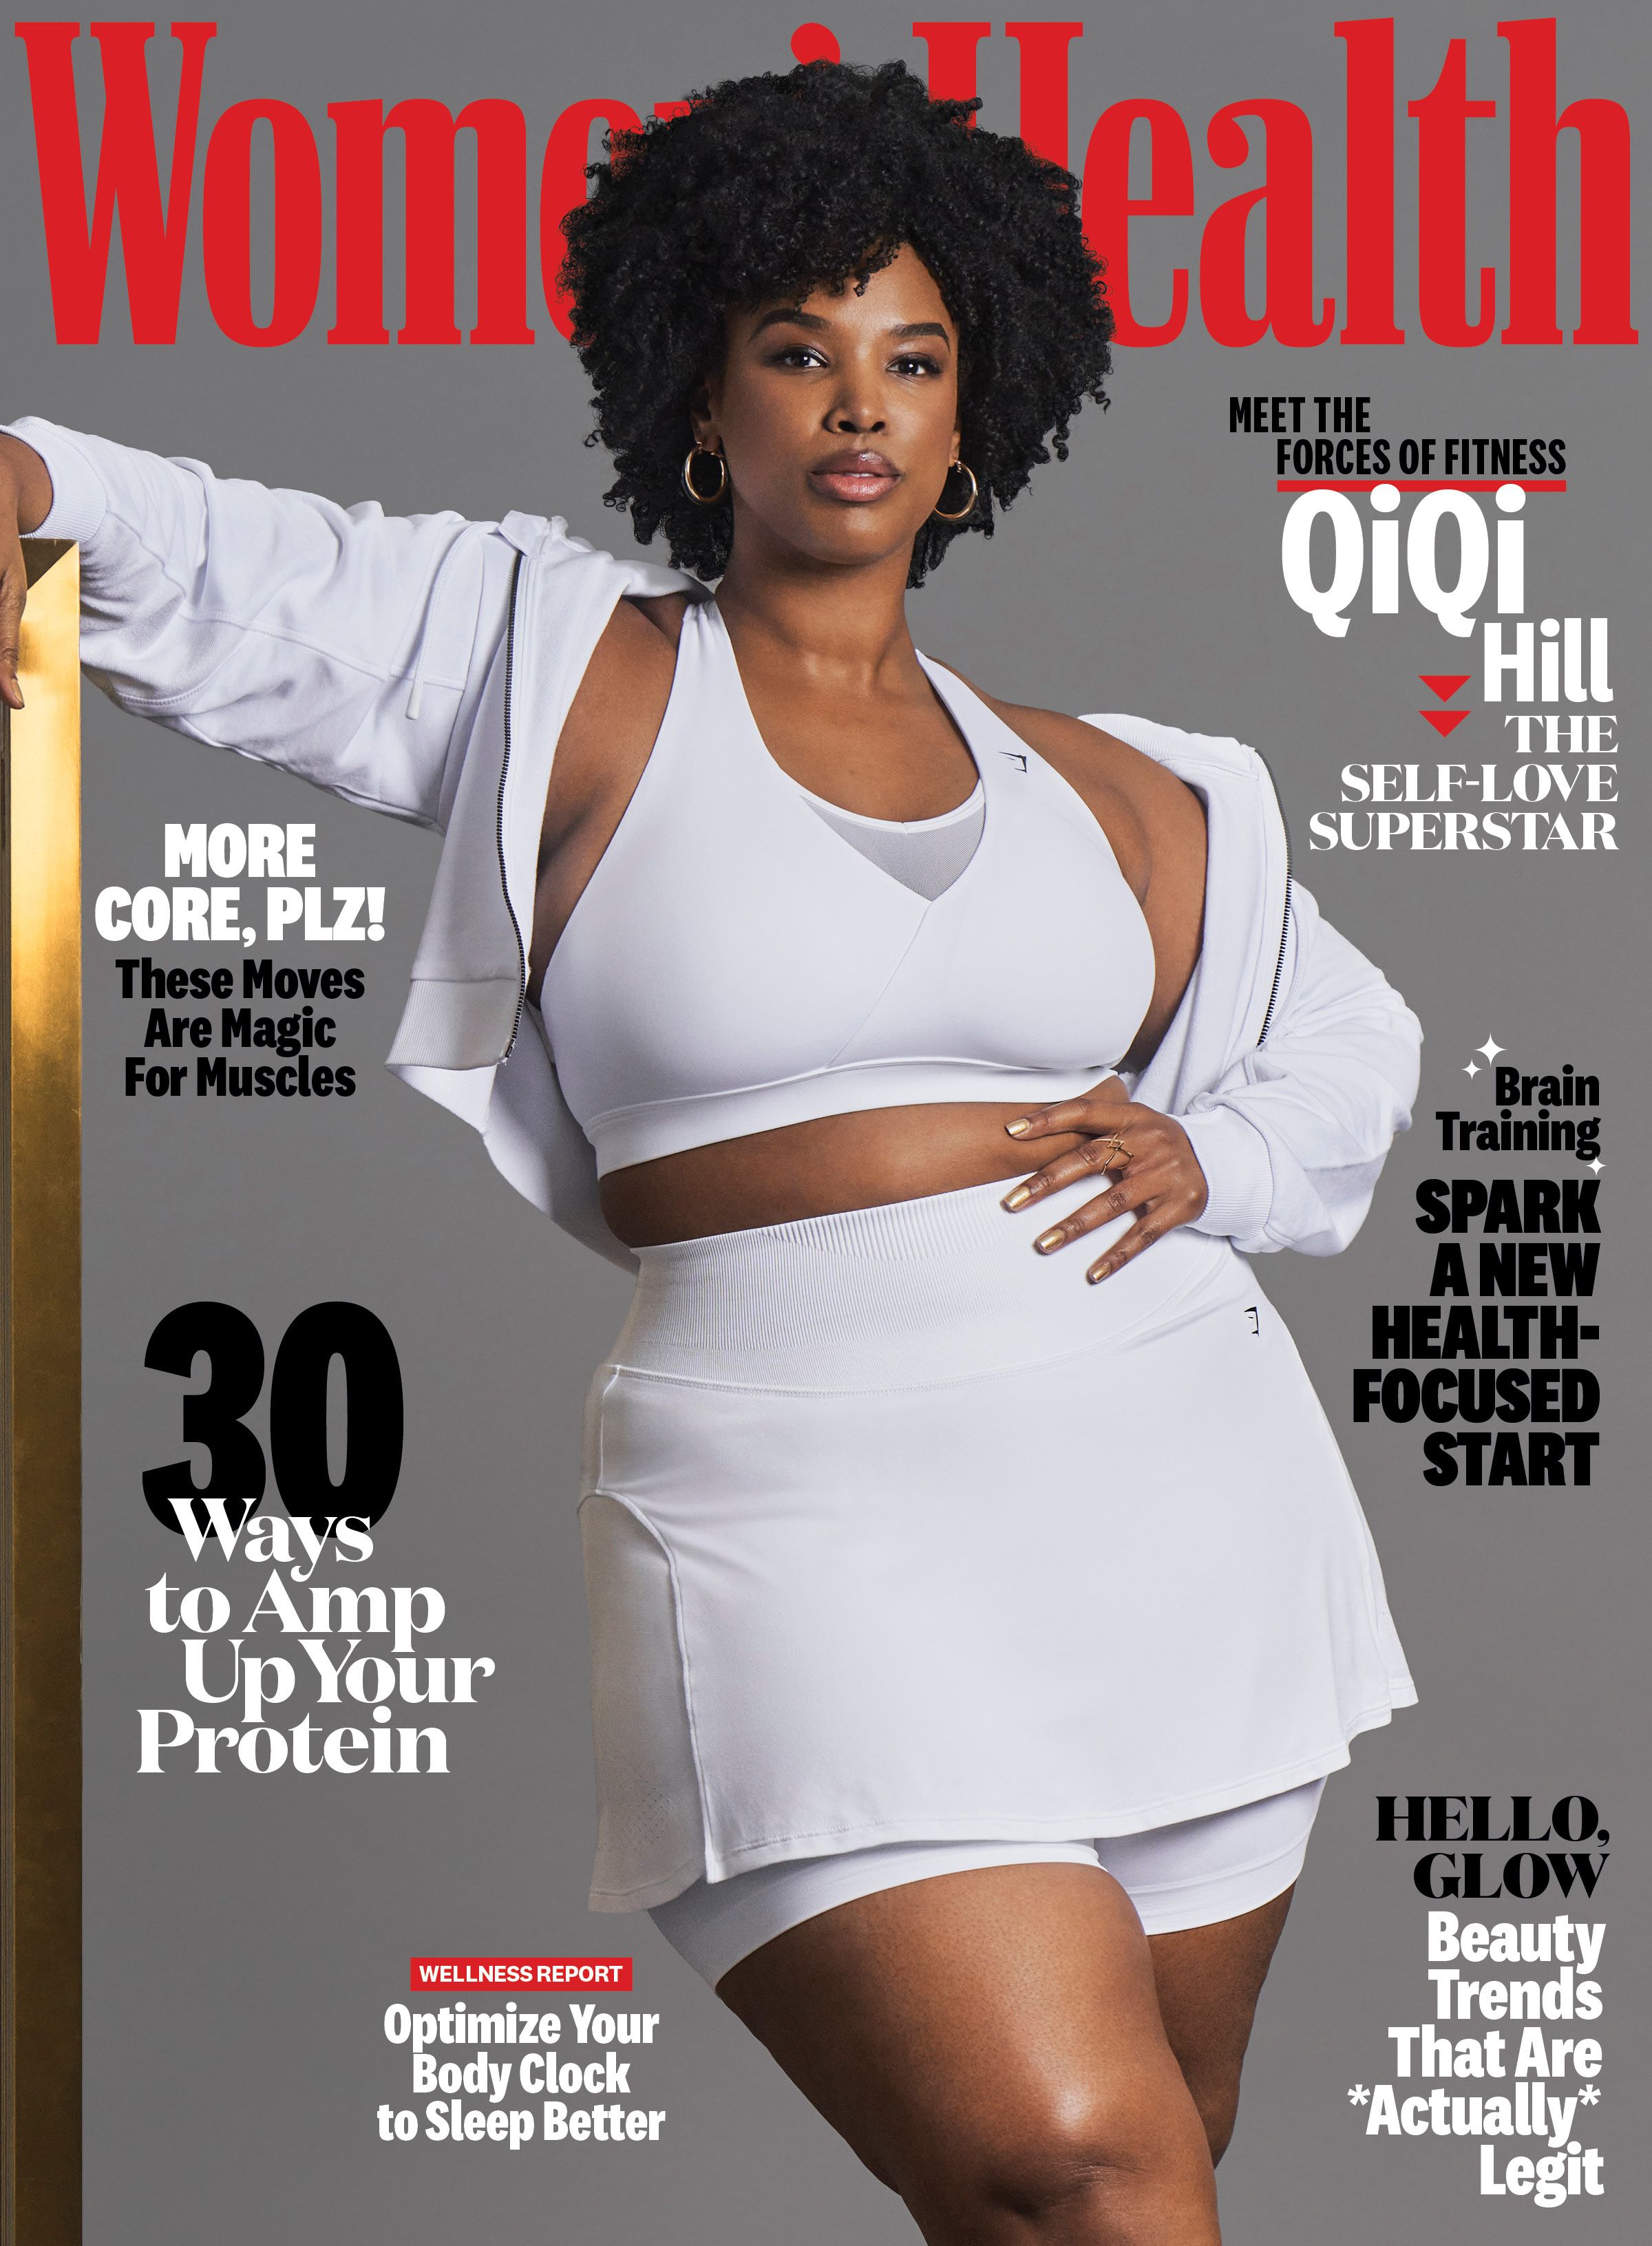 Dennis Publishing acquires Women's Fitness magazine